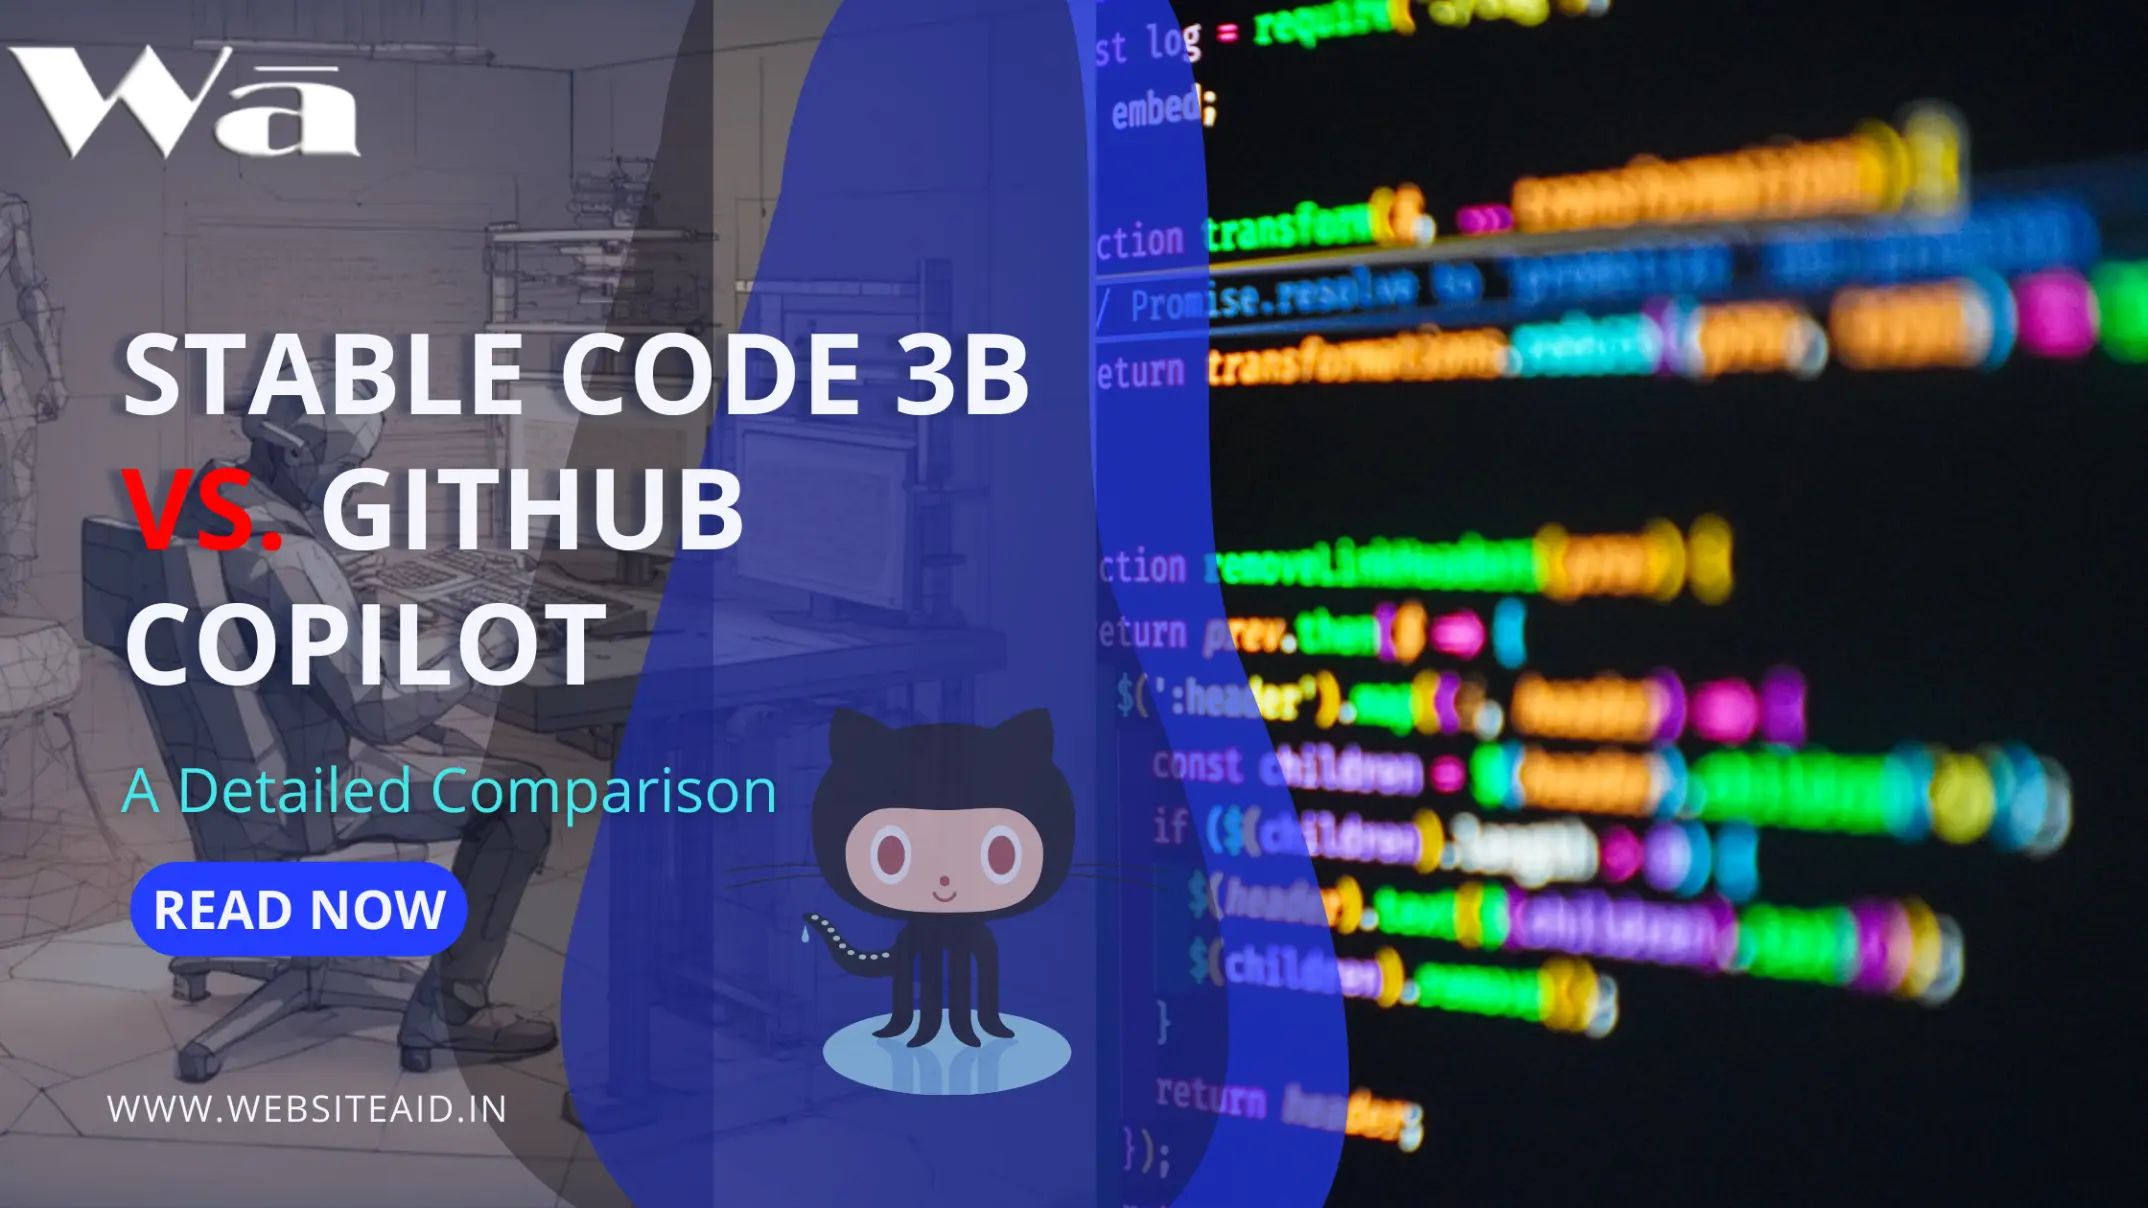 Stable Code 3B vs. GitHub Copilot